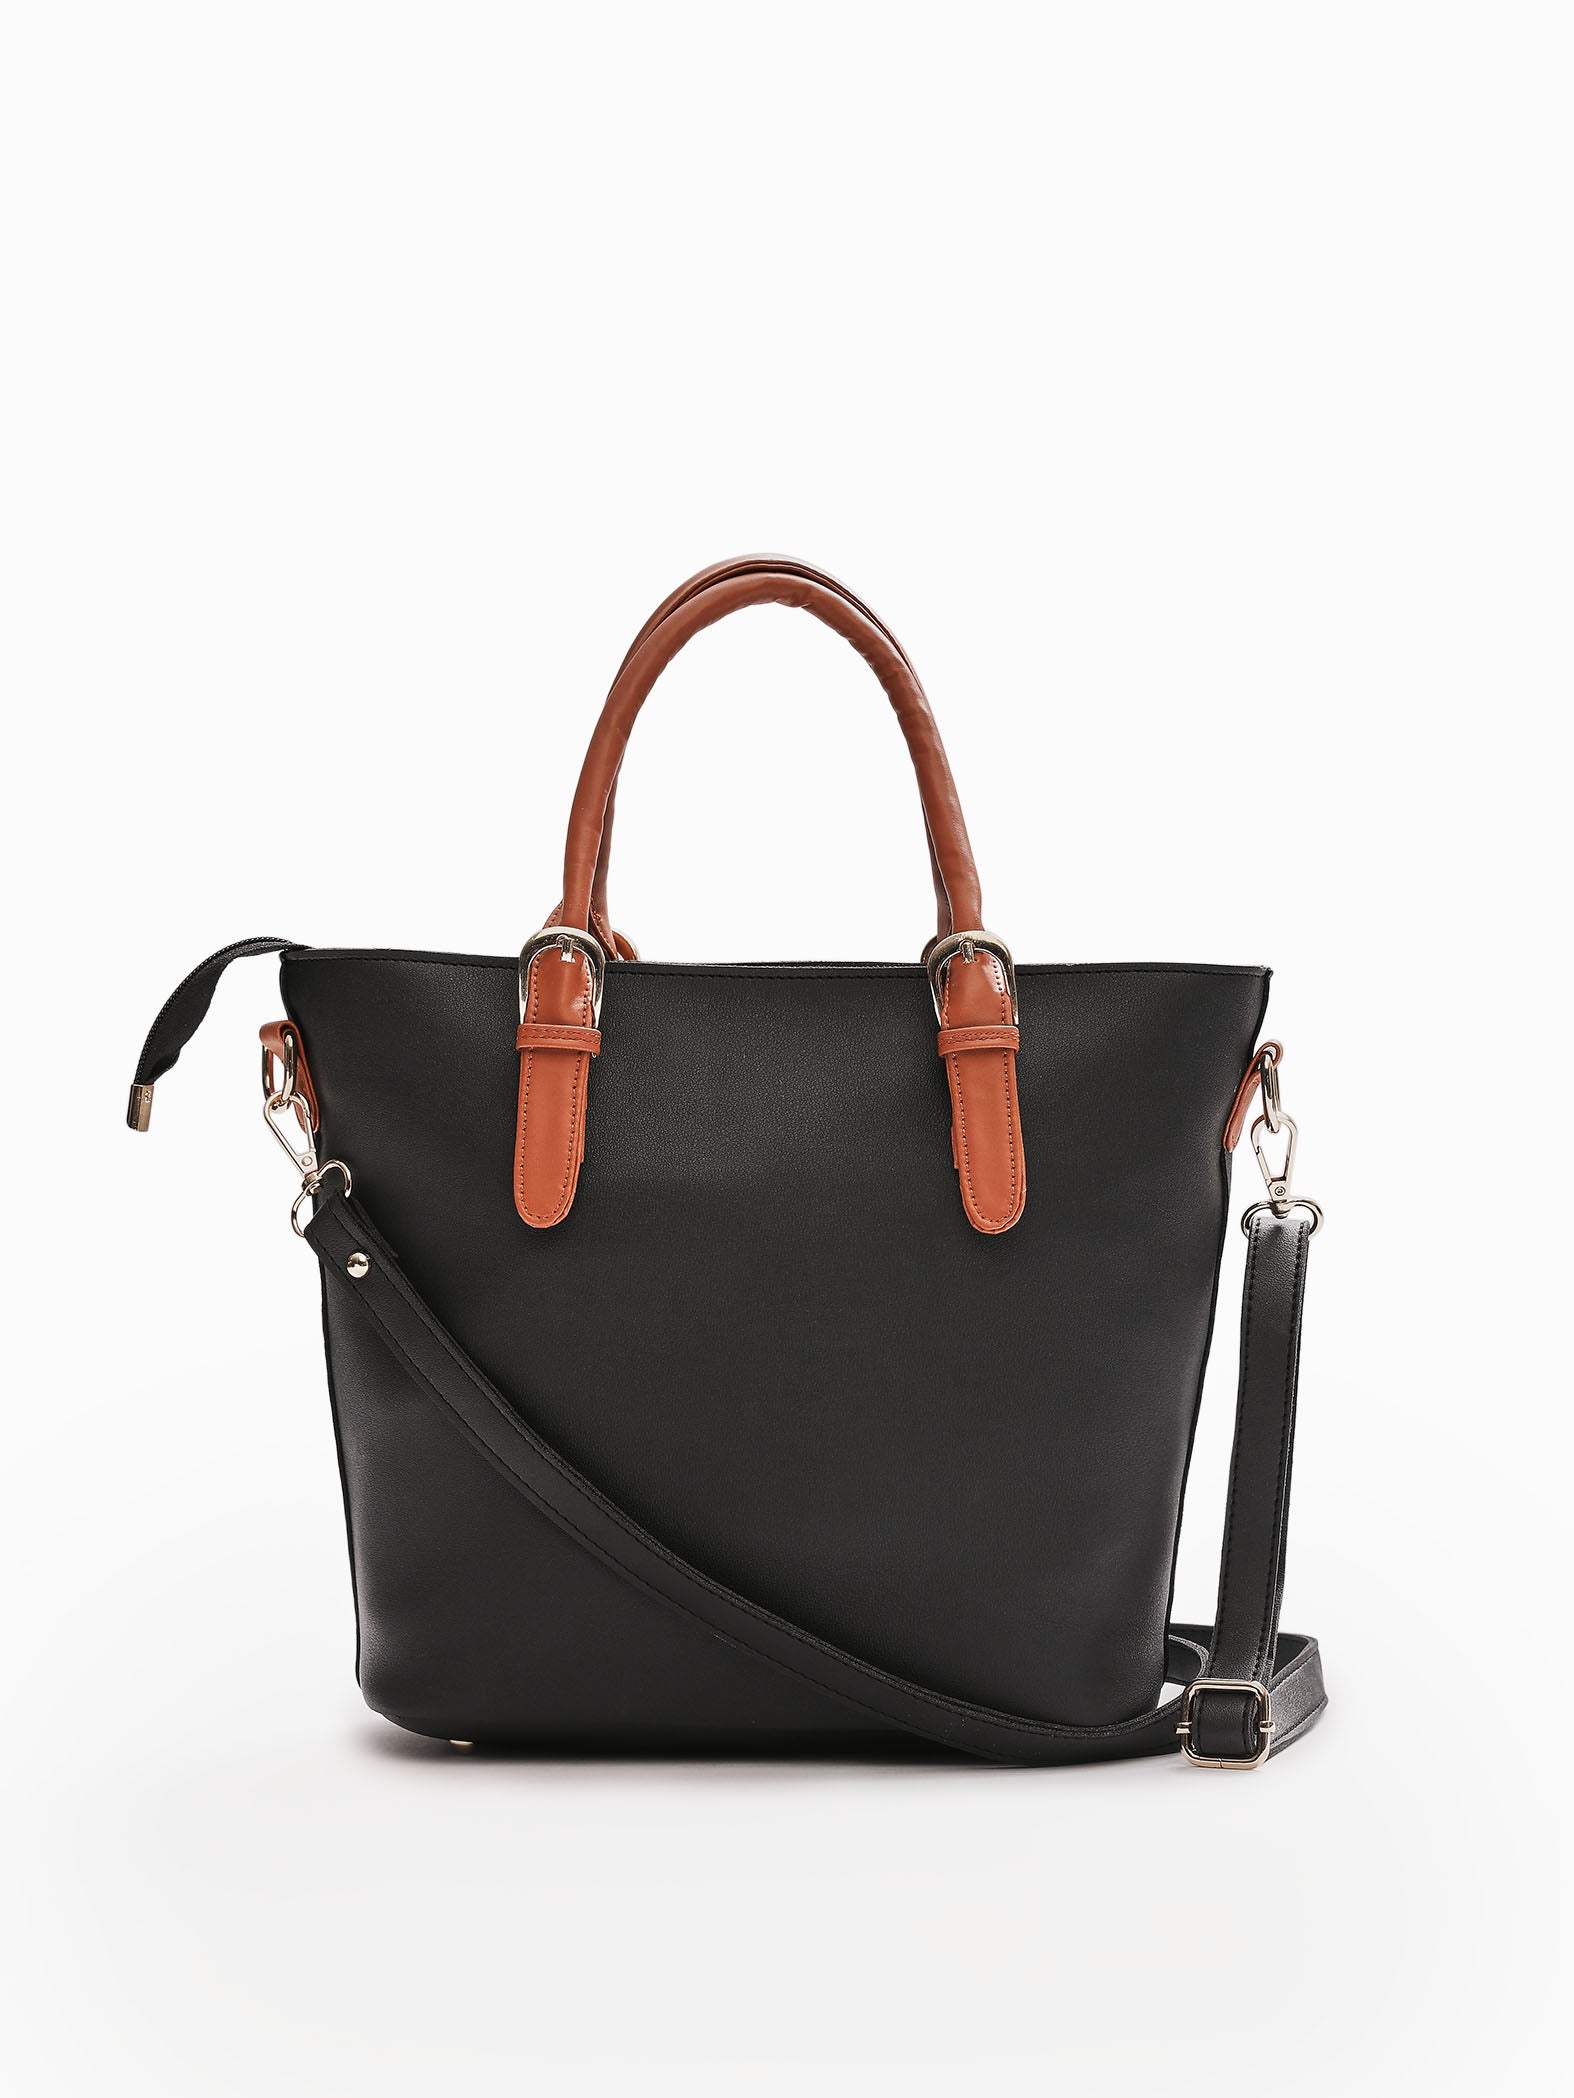 Black Handbag with Brown Handle